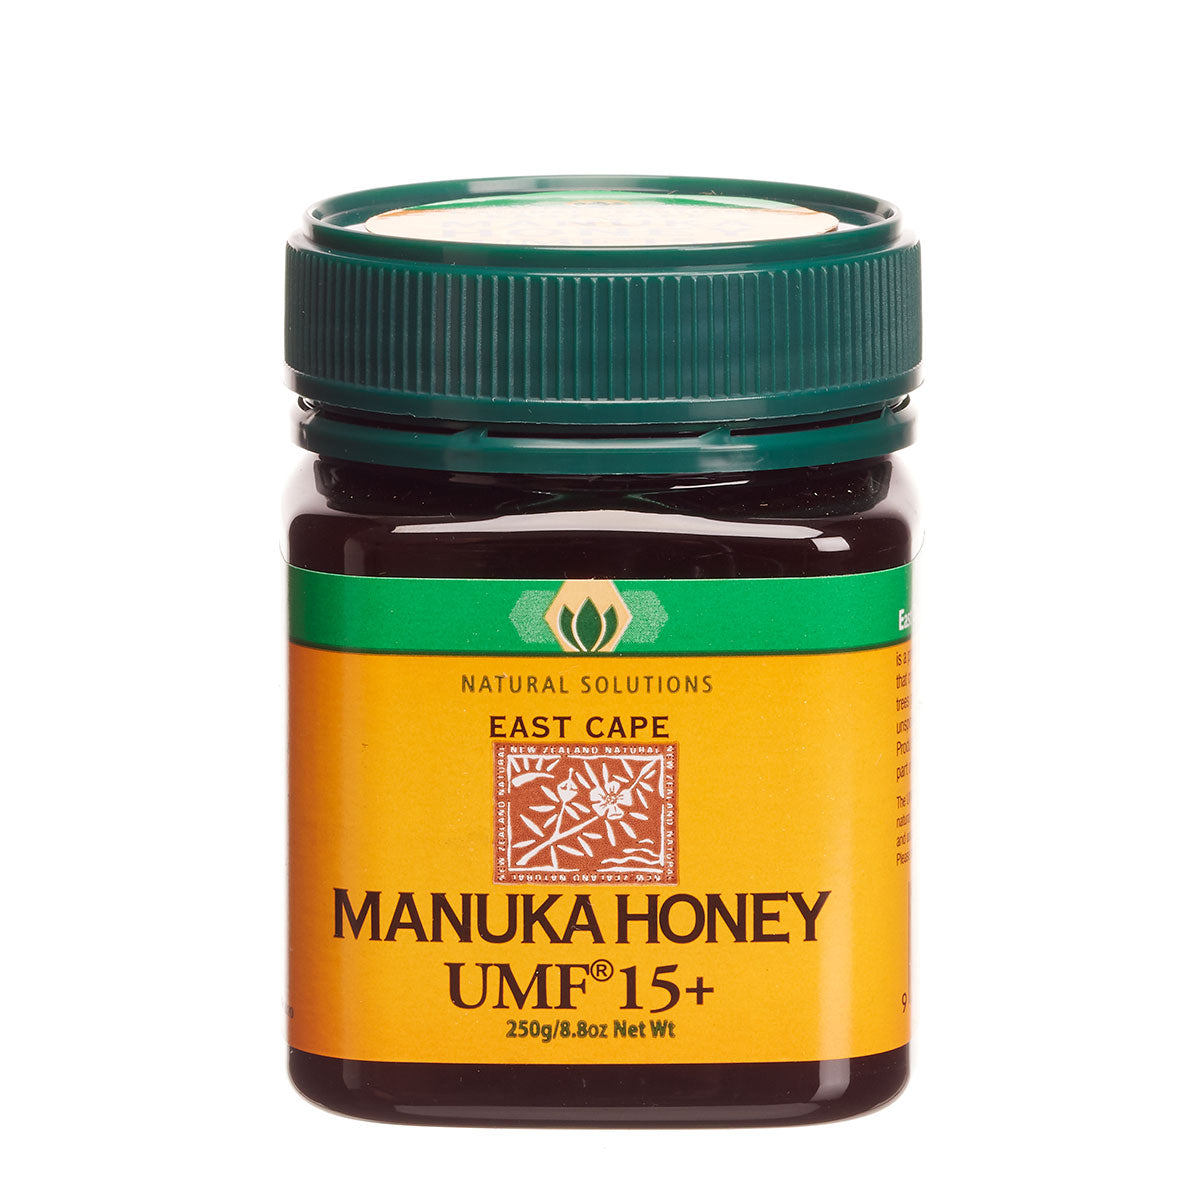 Is There Manuka Honey Near Me?